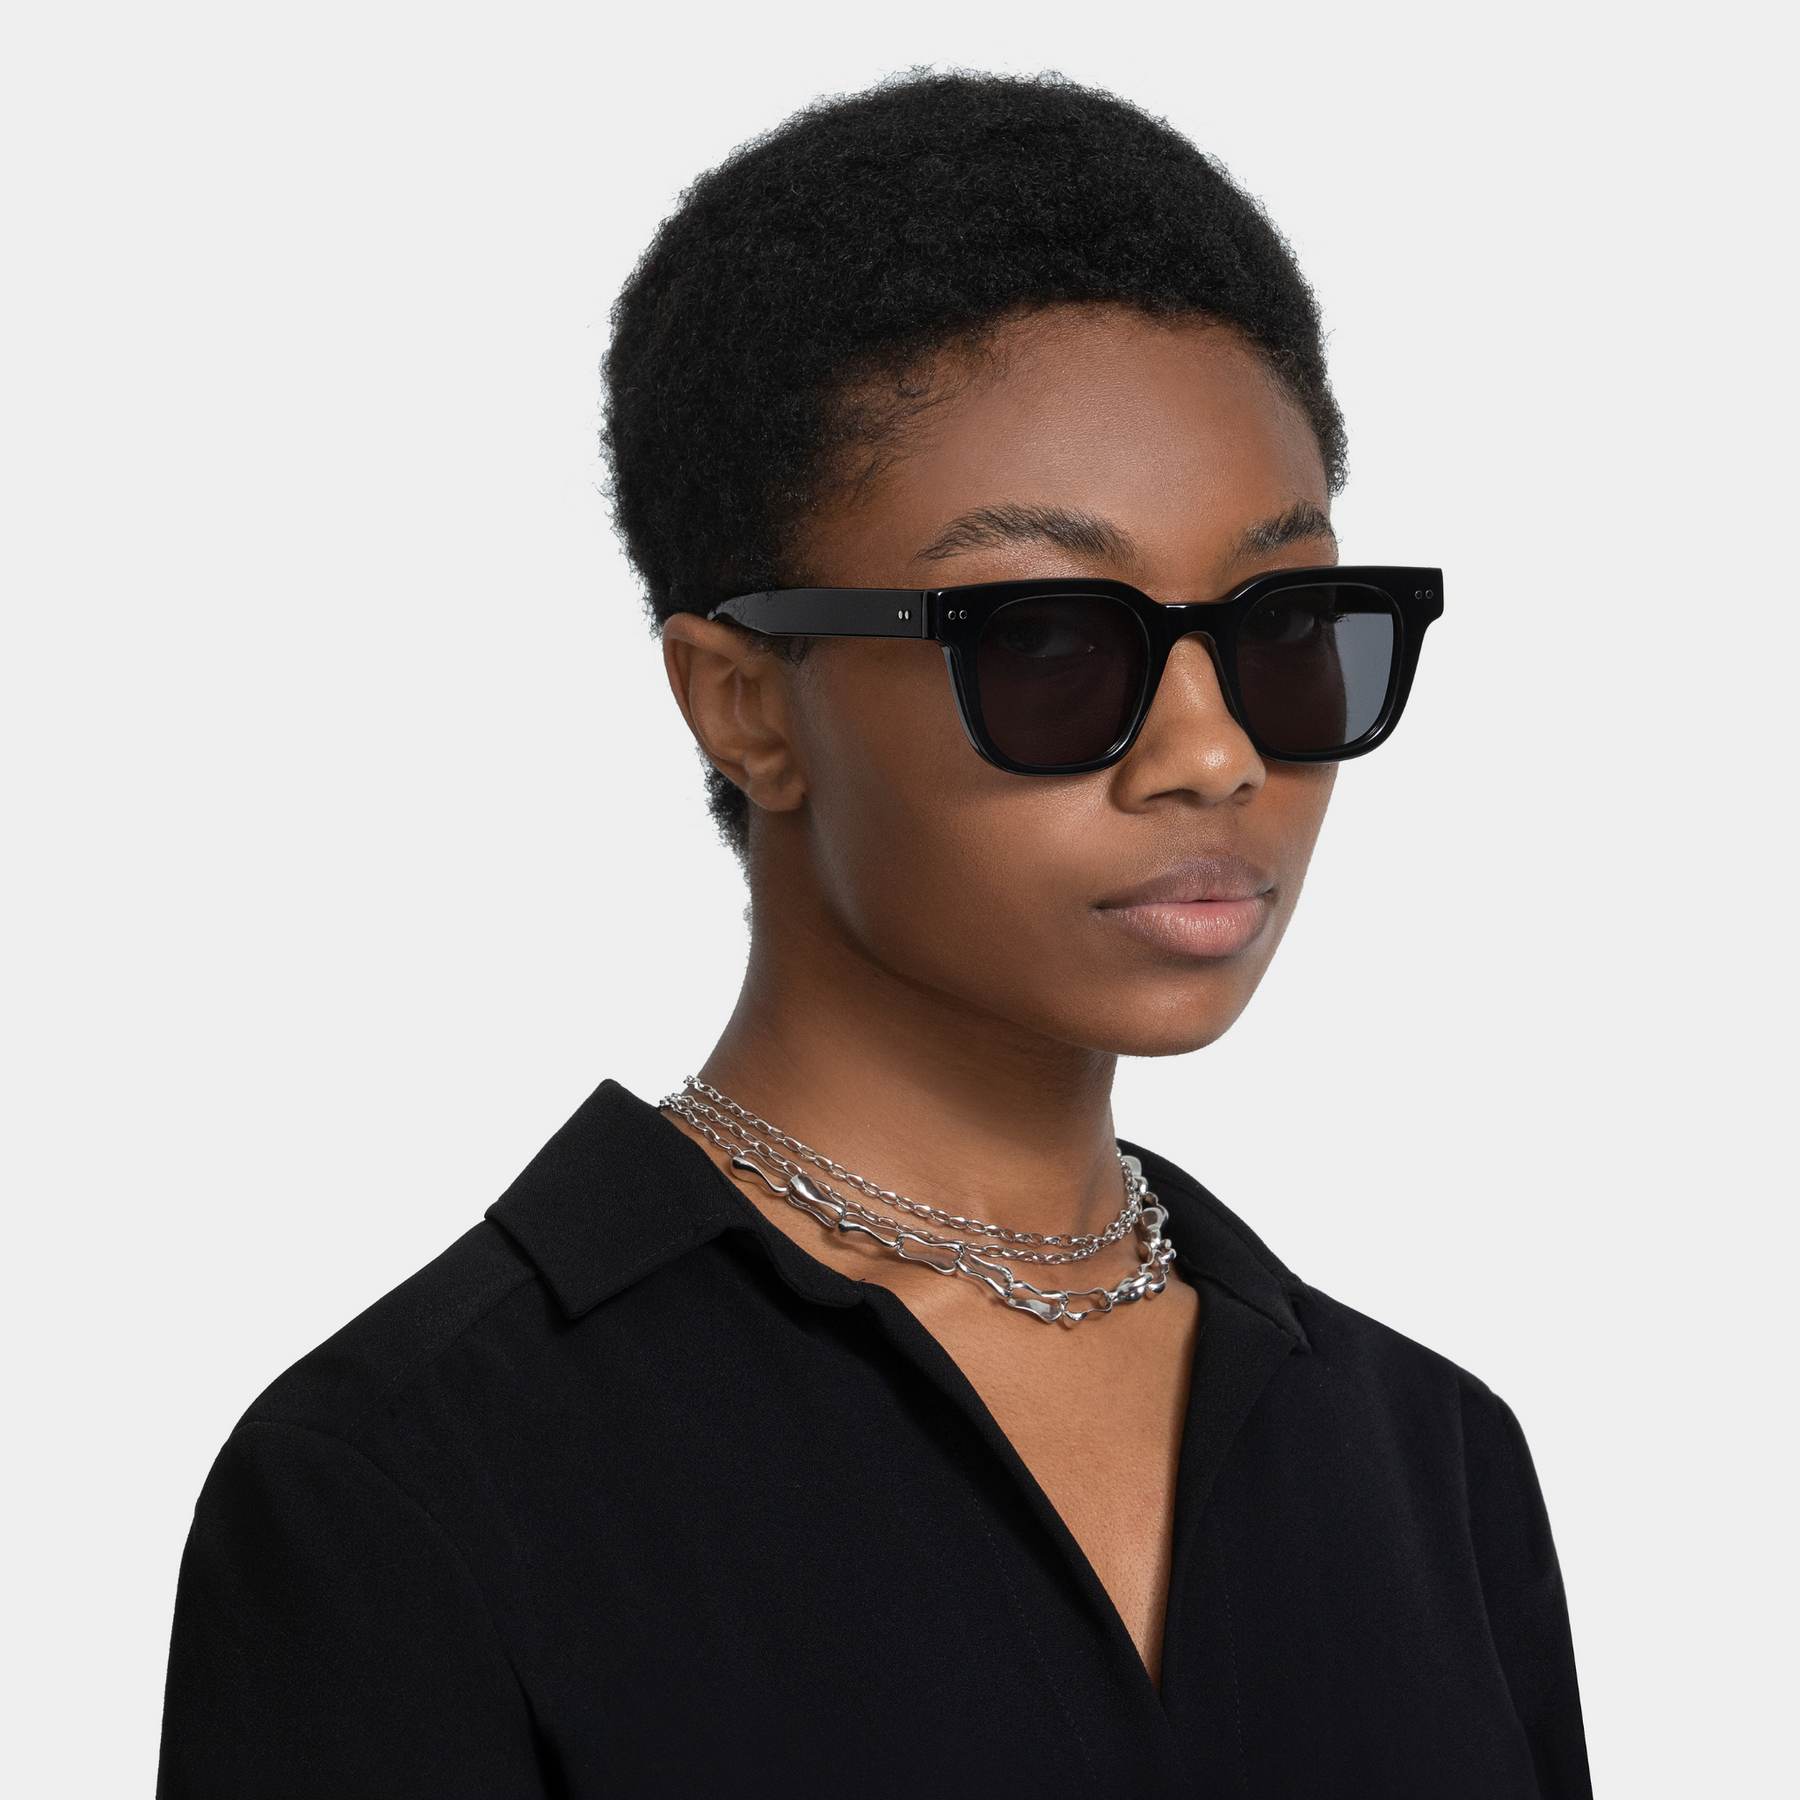 De-sunglasses| Dash black | Sunglasses for men and women